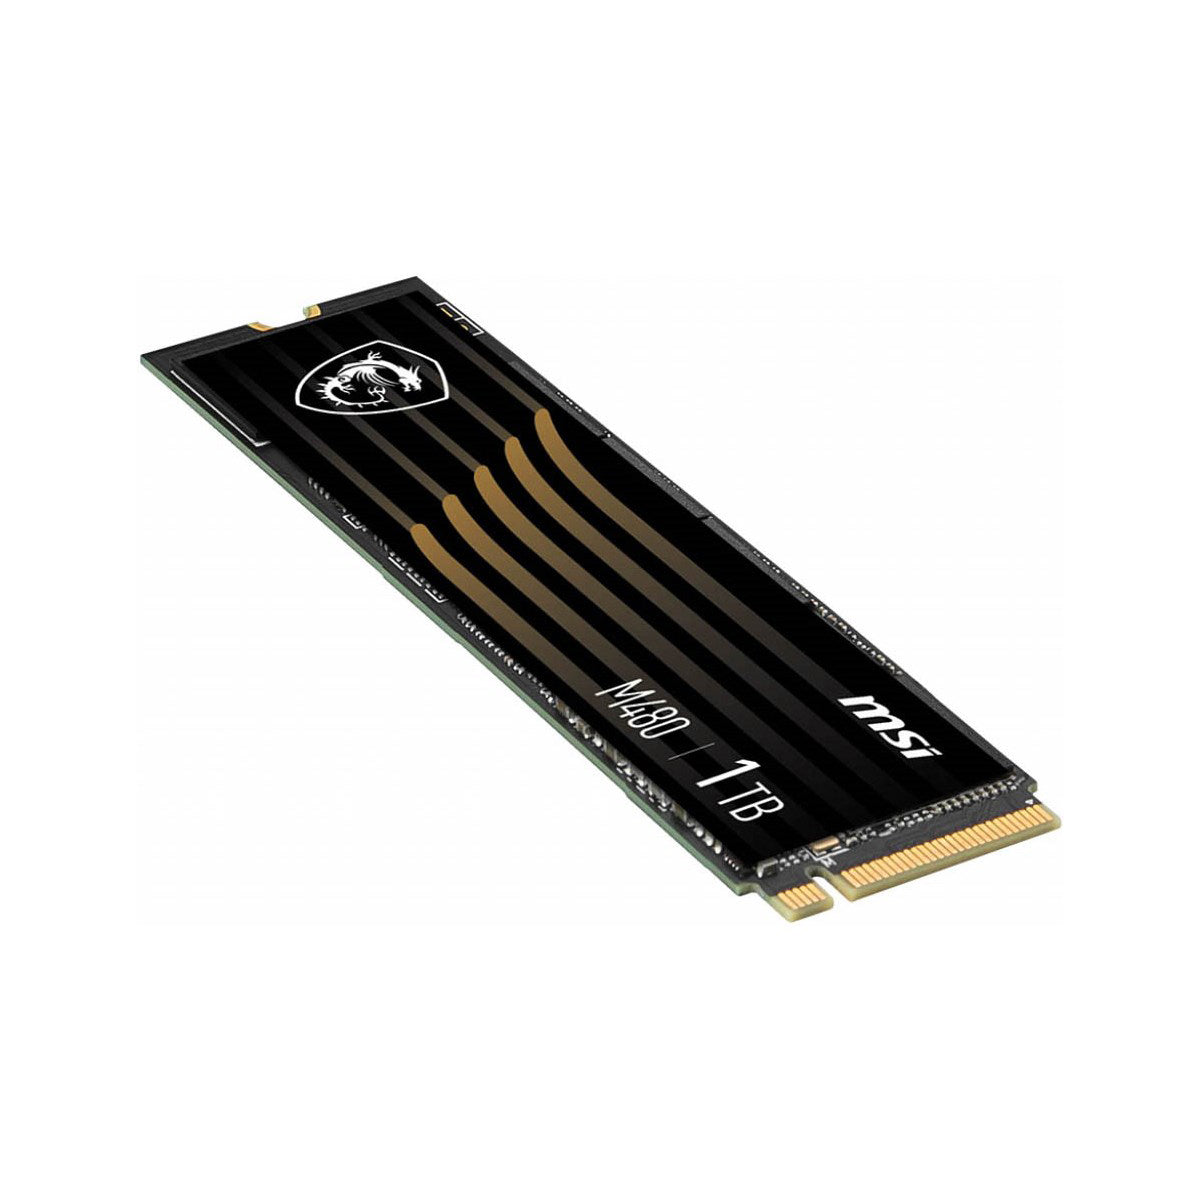 MSI SPATIUM M480 1TB M.2 -2280 PCIe 4.0 x4 NVMe PC SSD